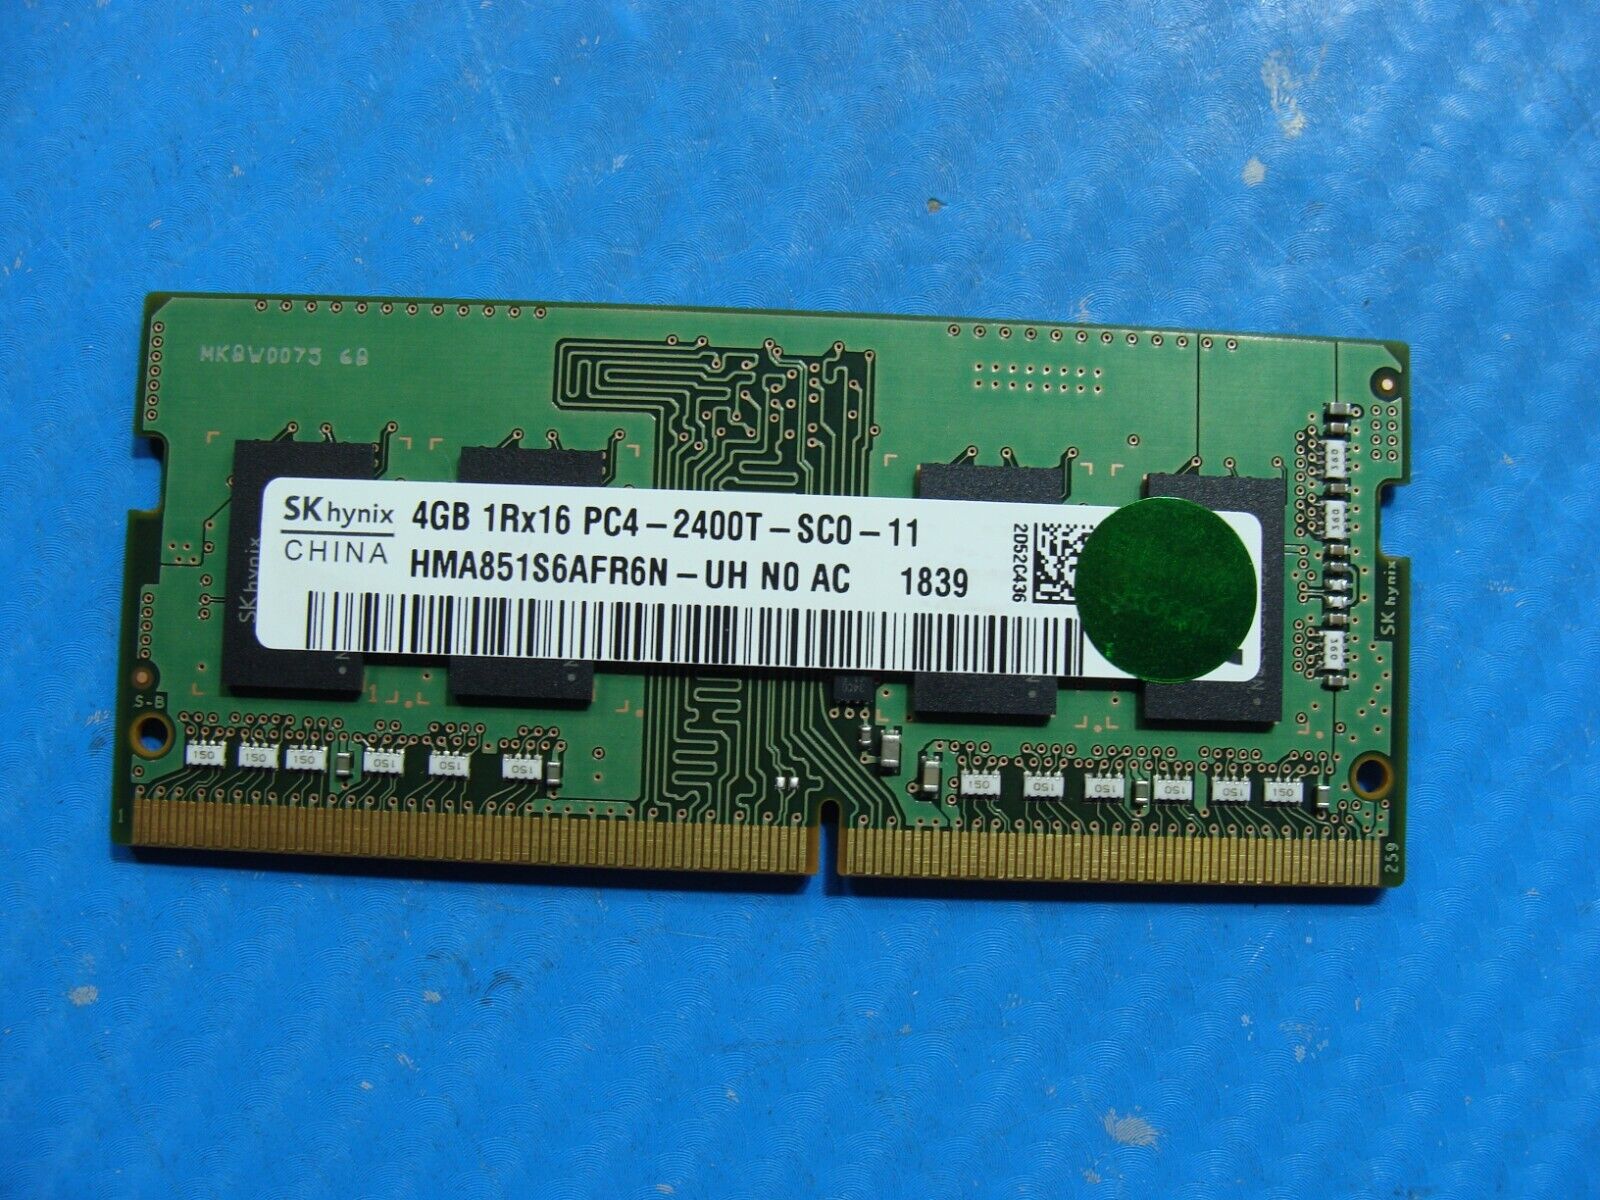 Dell 3490 SK Hynix 4GB 1Rx16 PC4-2400T Memory RAM SO-DIMM HMA851S6AFR6N-UH